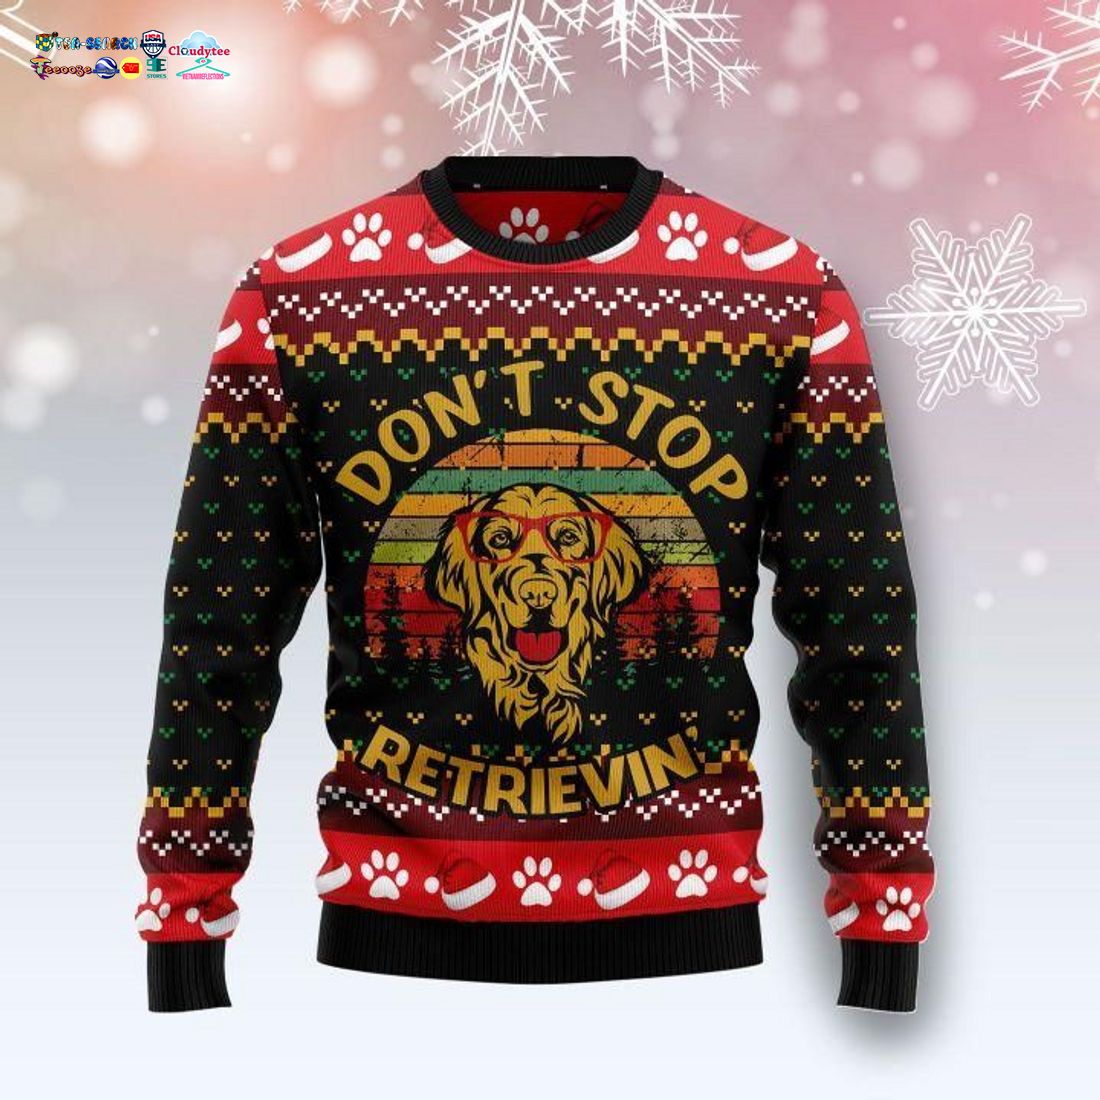 Golden Retriever Don’t Stop Retrievin Ugly Christmas Sweater